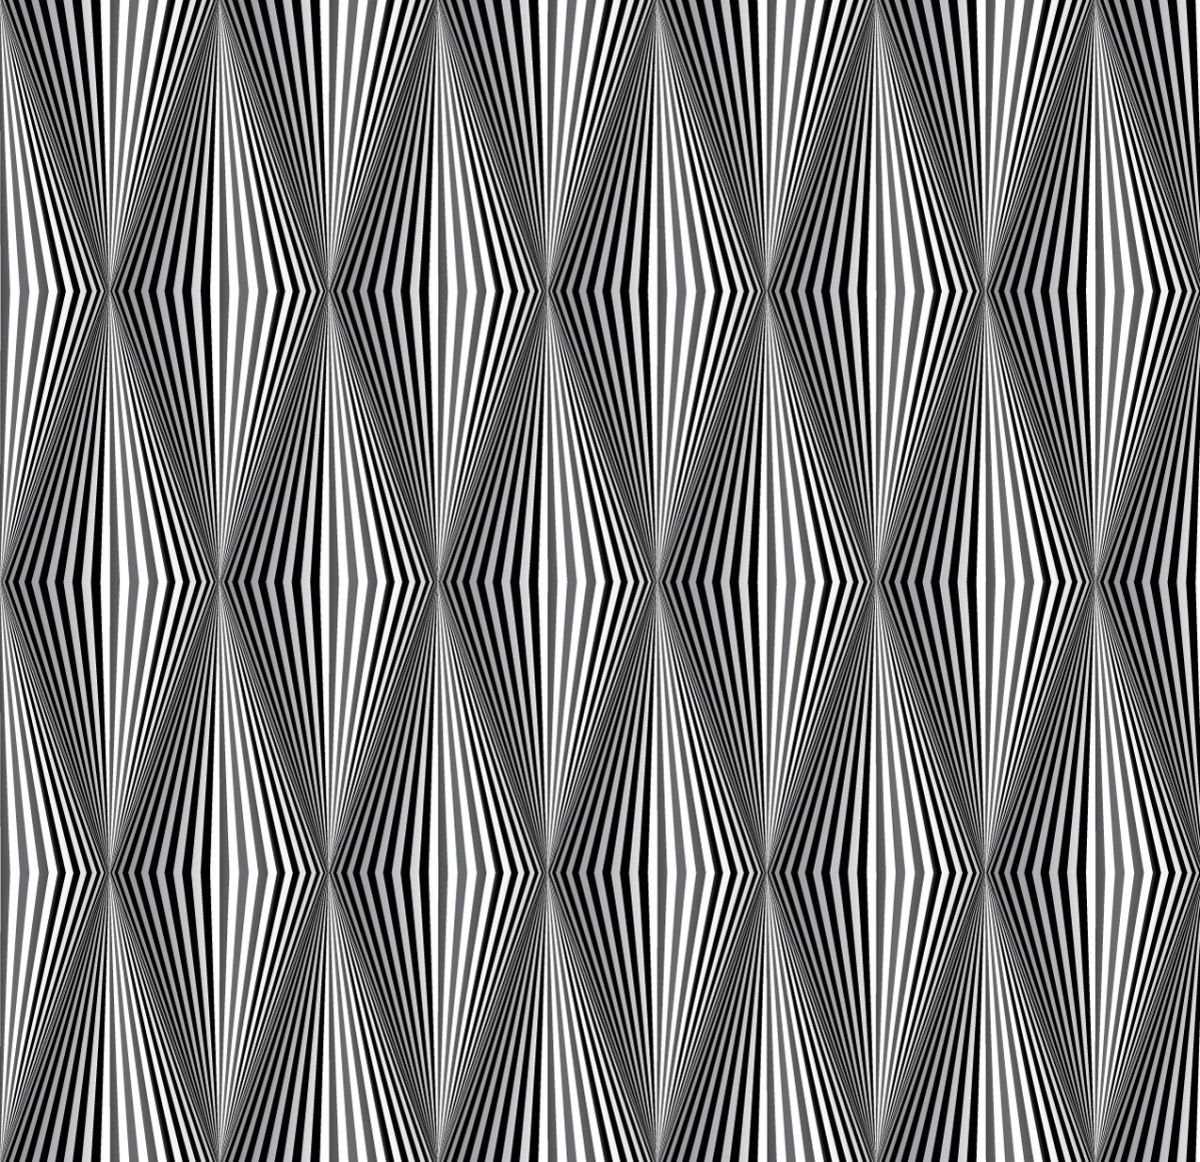 Cone Stripes #1 by David Gill